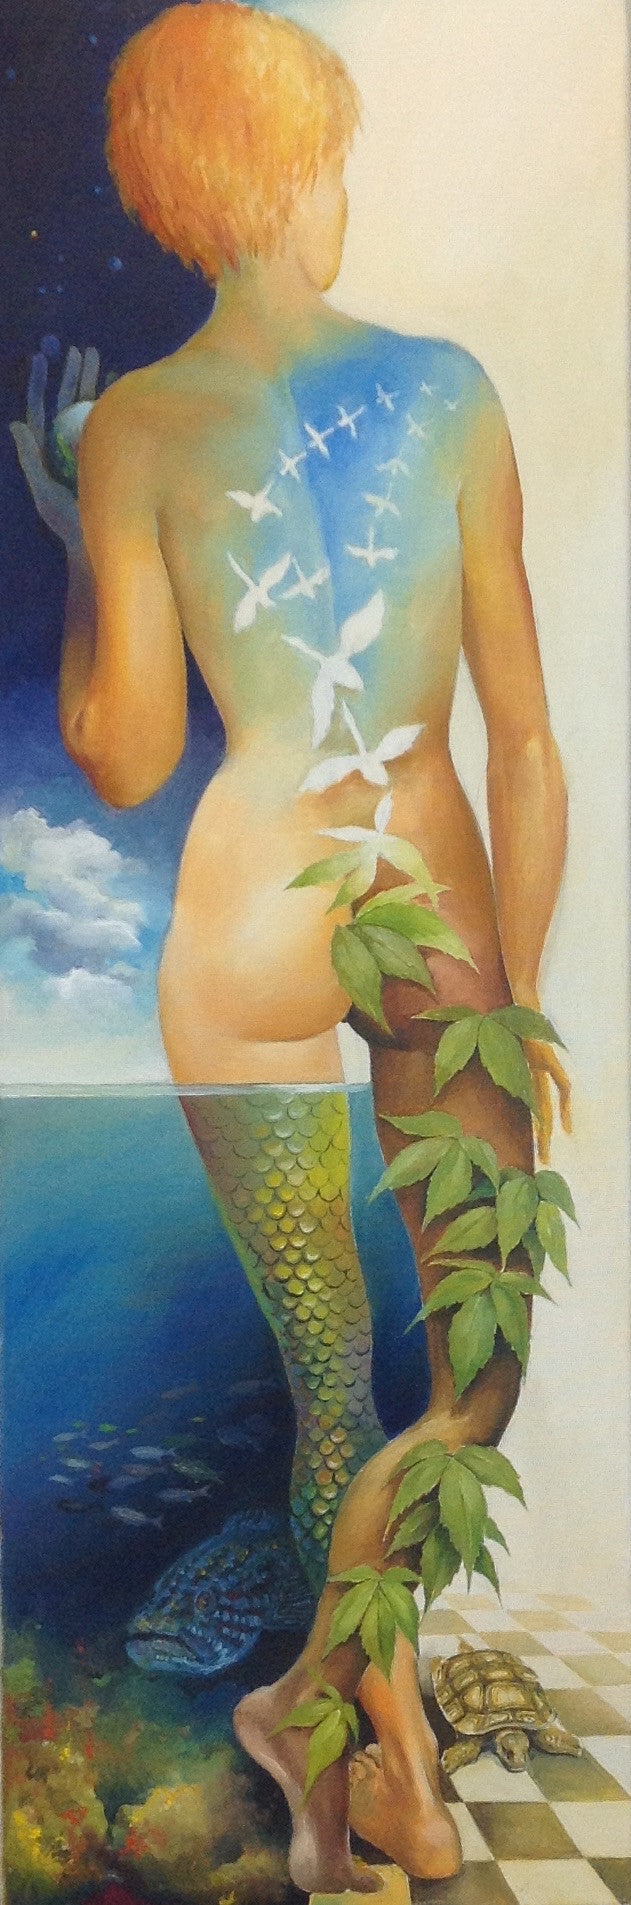 Goddess Of Nature - Green Gallery